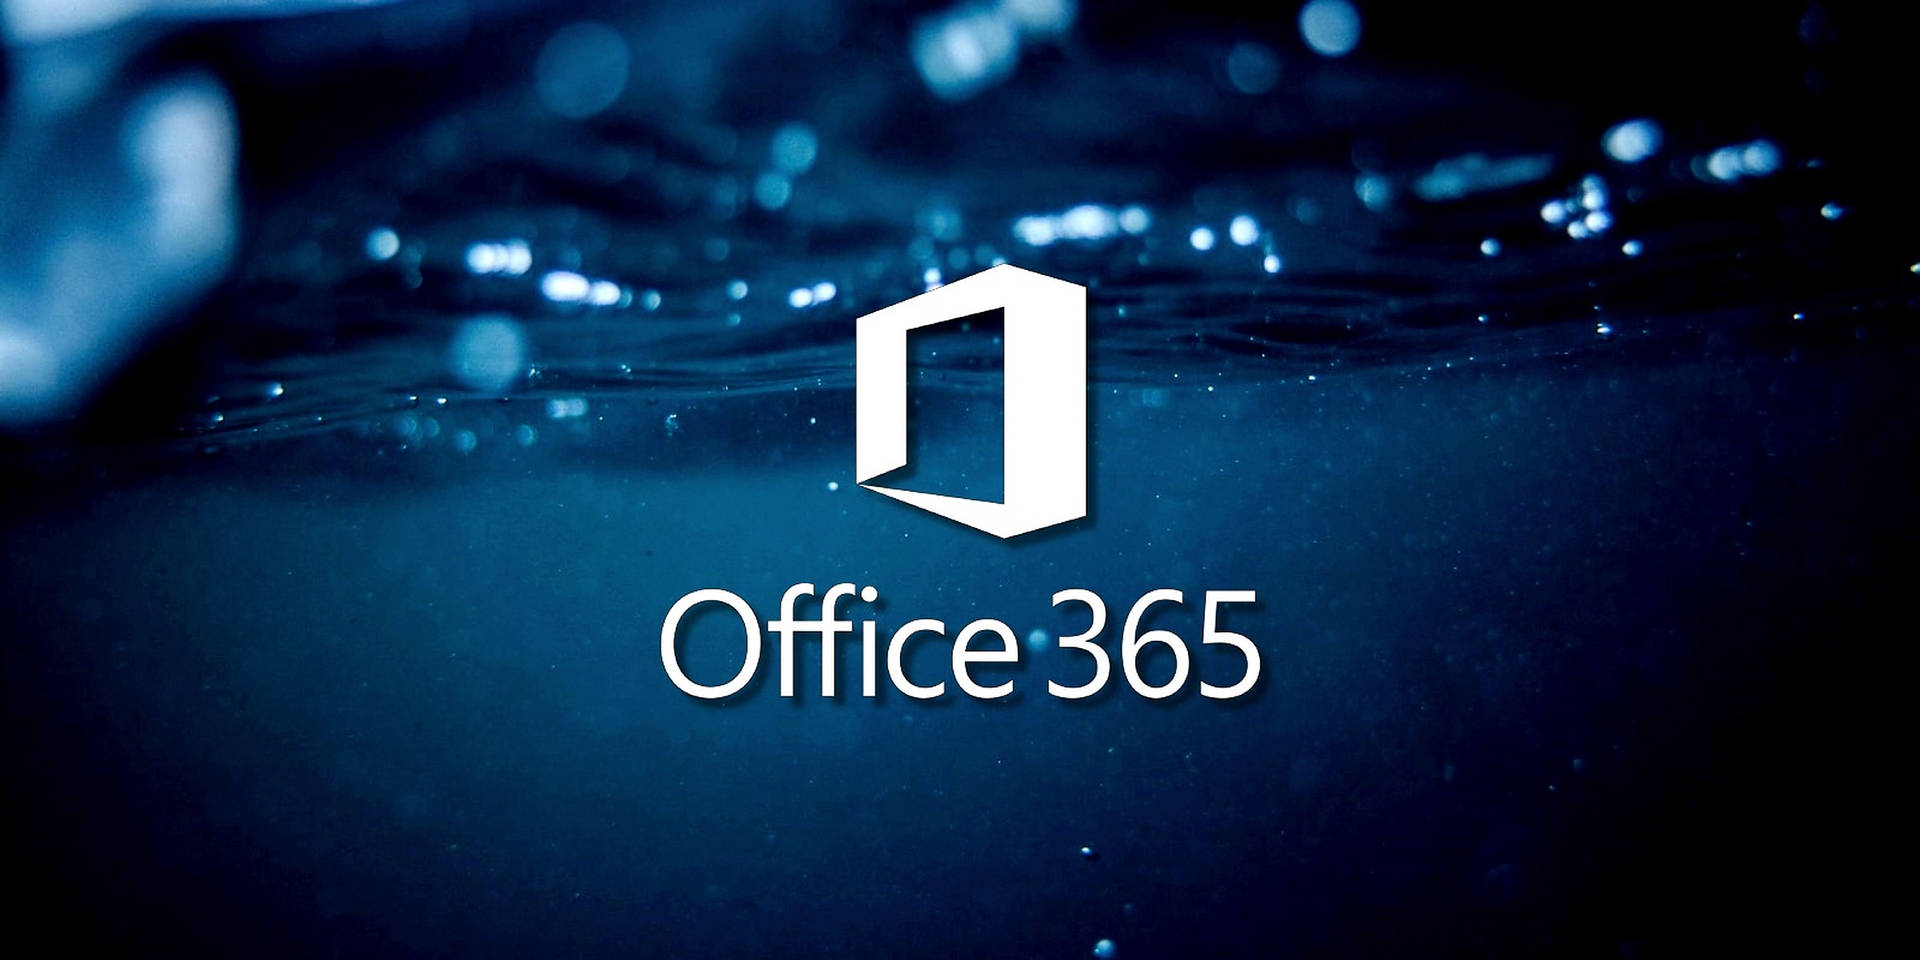 Office 365 Aqua Blue Background